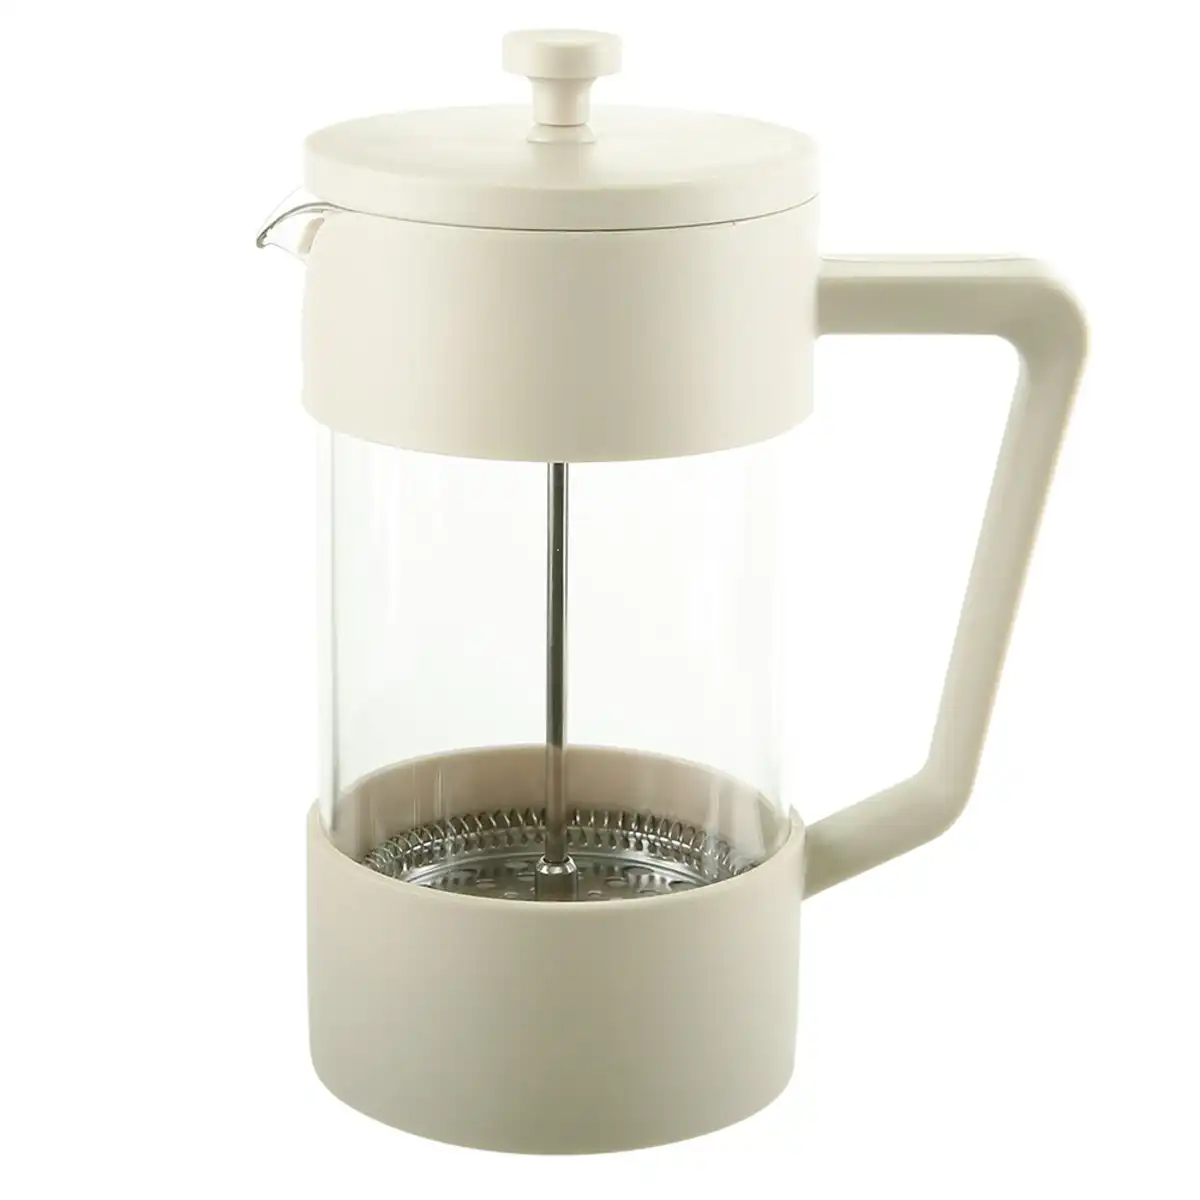 CASABARISTA OSLO COFFEE PLUNGER 5 CUP 600ml - CREAM